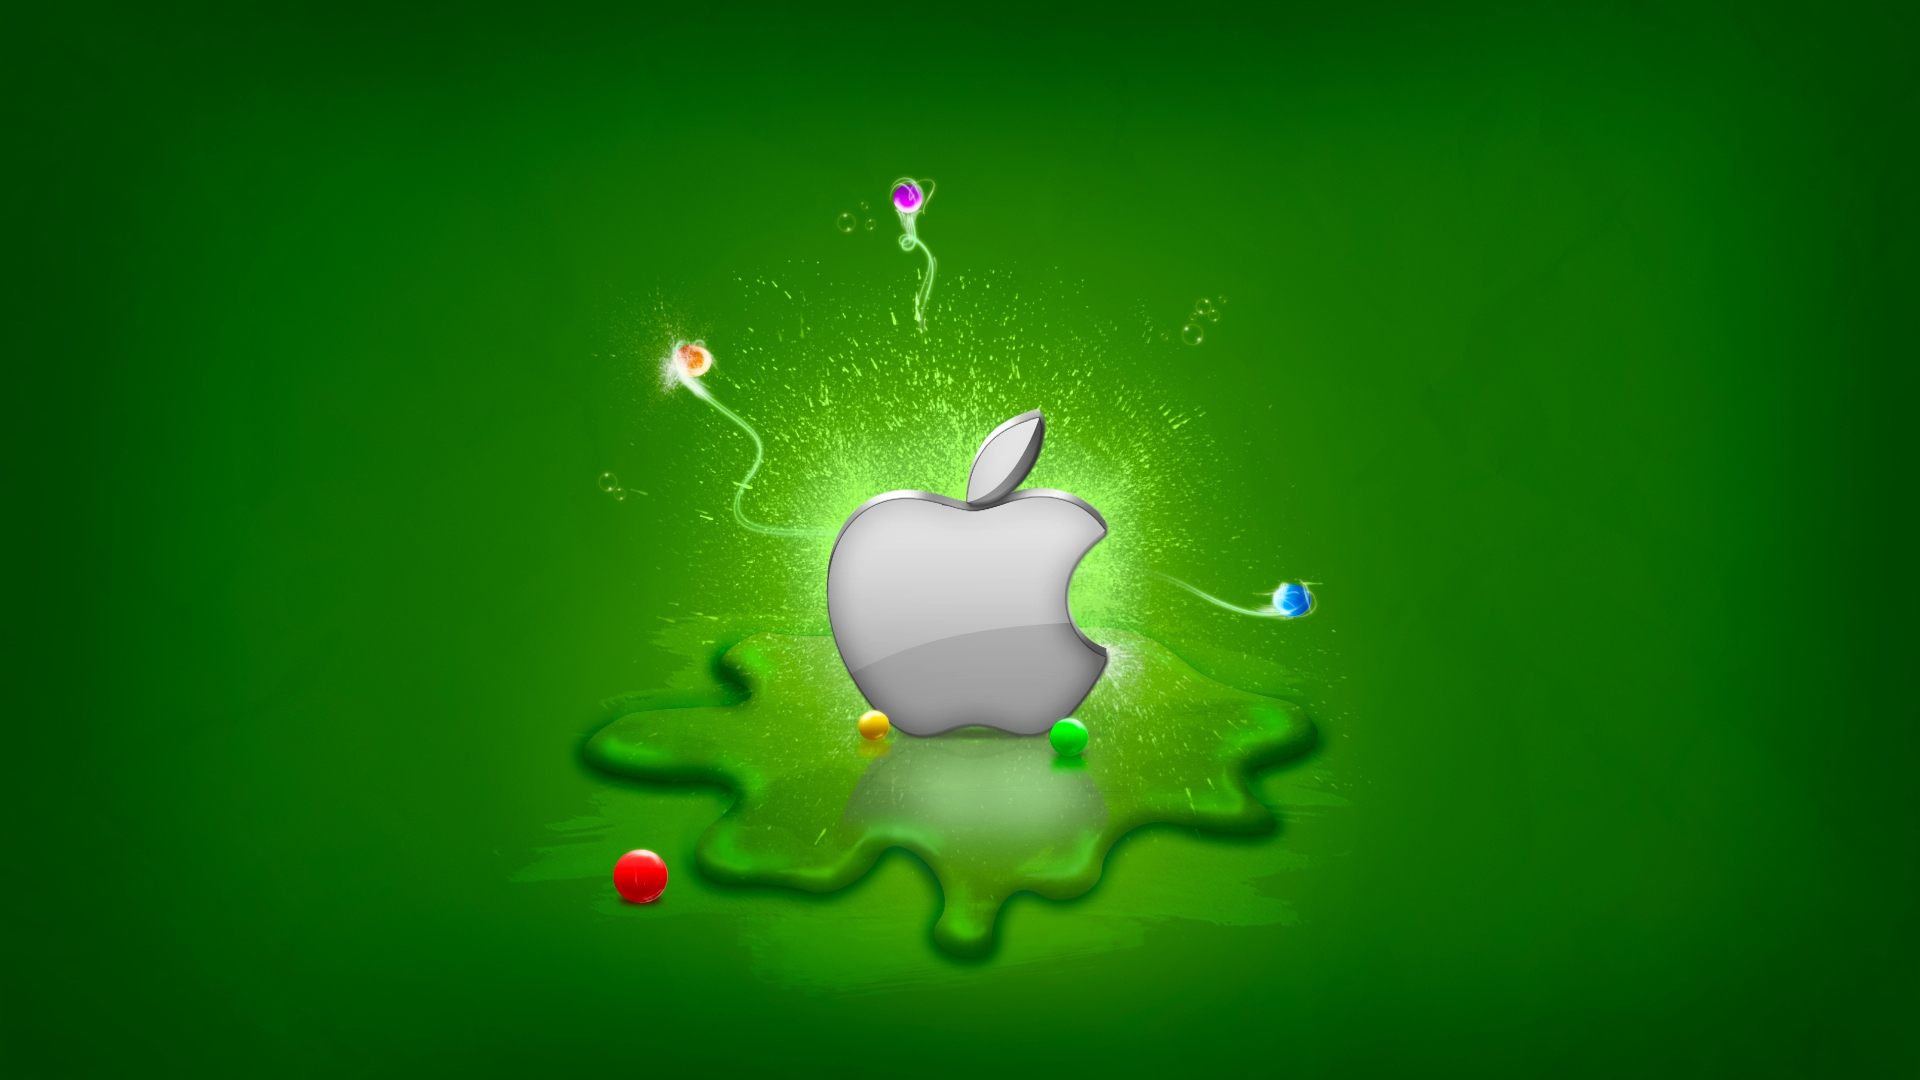 apple logo wallpaper hd,green,water,light,illustration,leaf